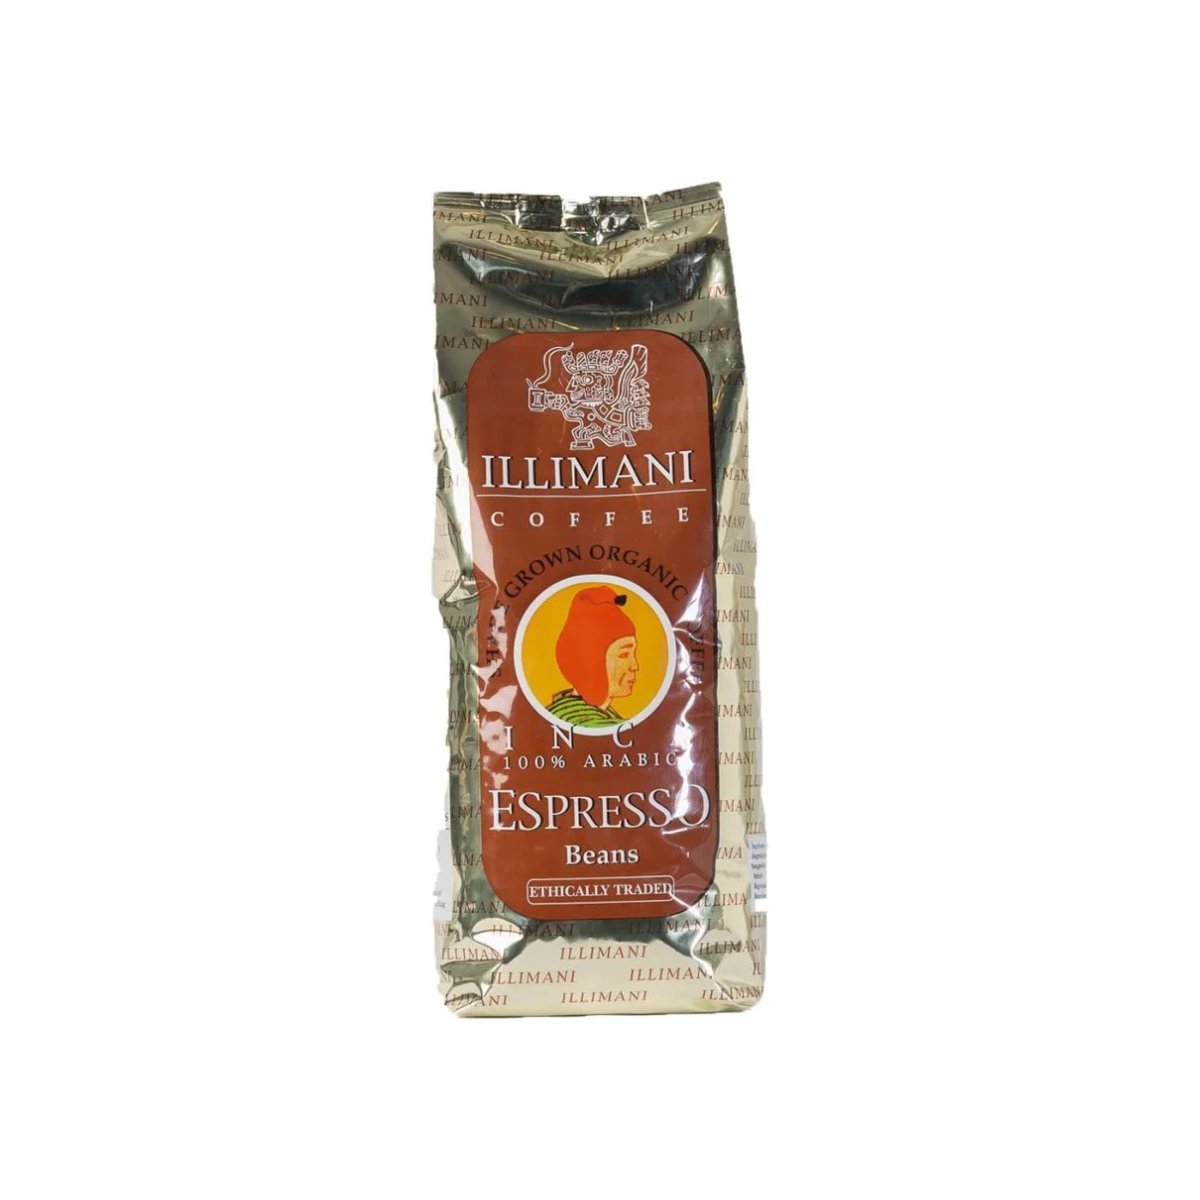 Illimani Espresso Beans Inca biologische koffiebonen Illimani 8716157000030 1000 gram 100% arabica